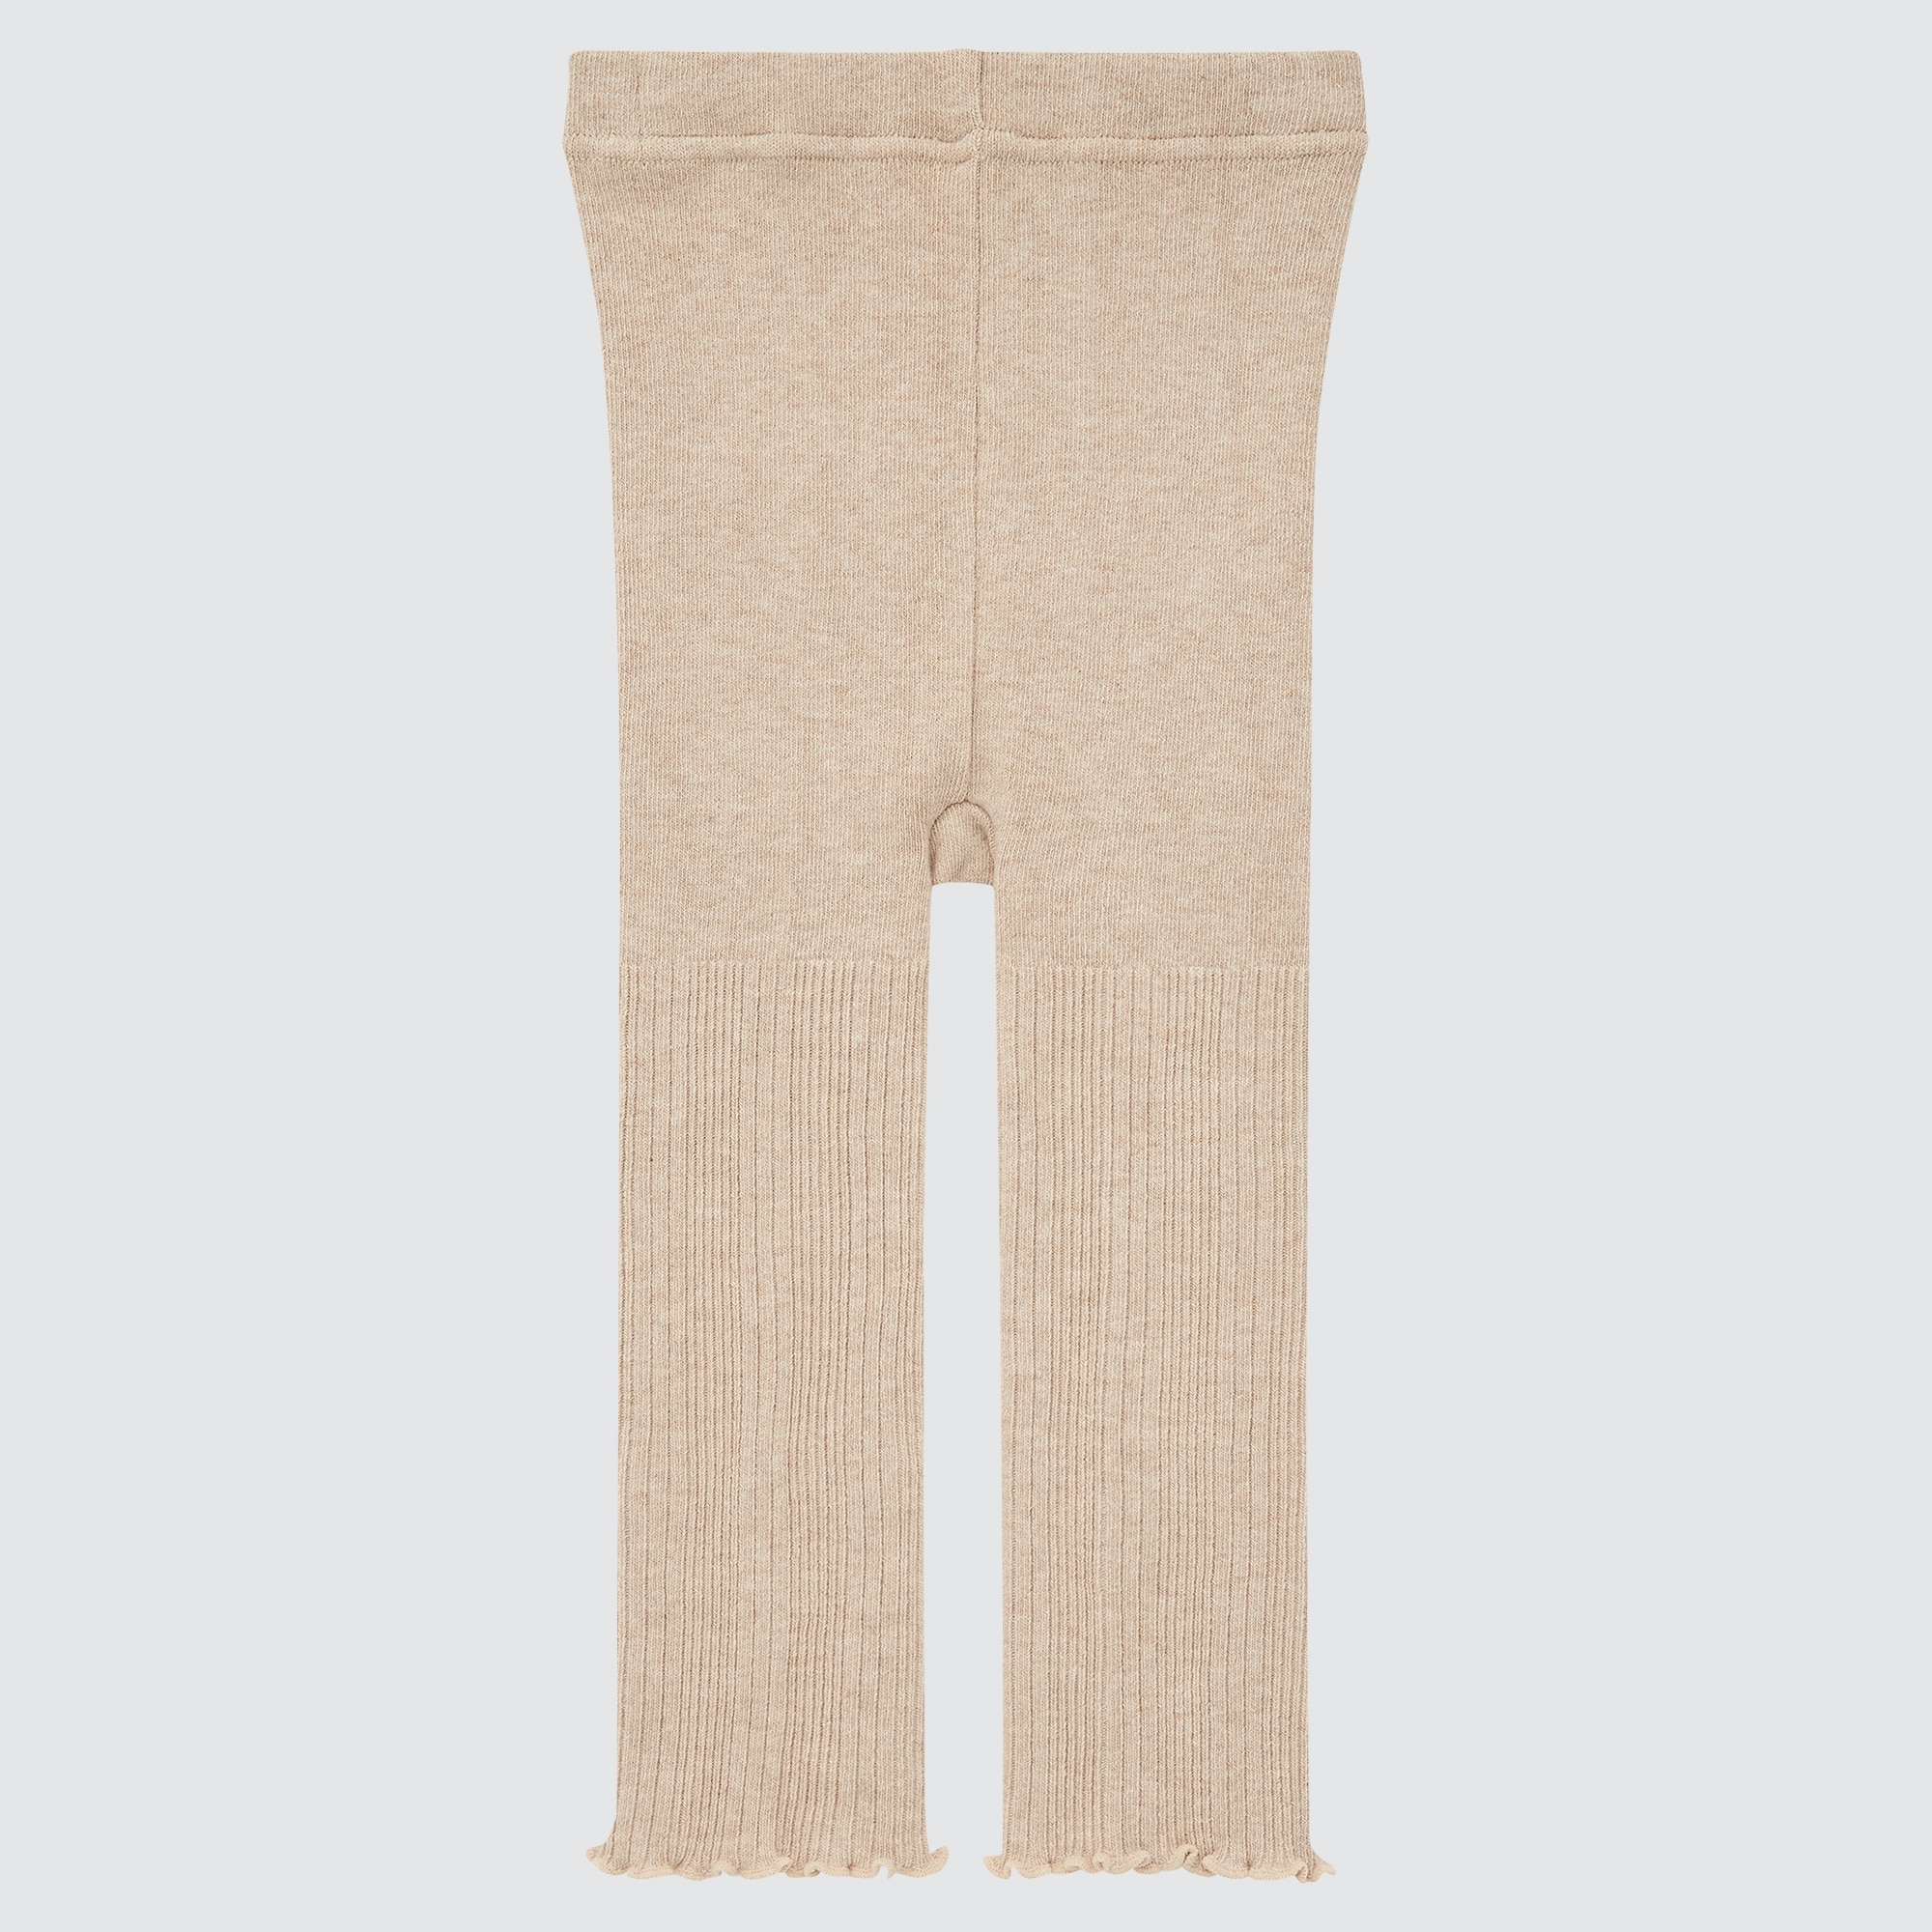 UNIQLO Mame Kurogouchi 3D Knit Ribbed Front Slit Pants | StyleHint